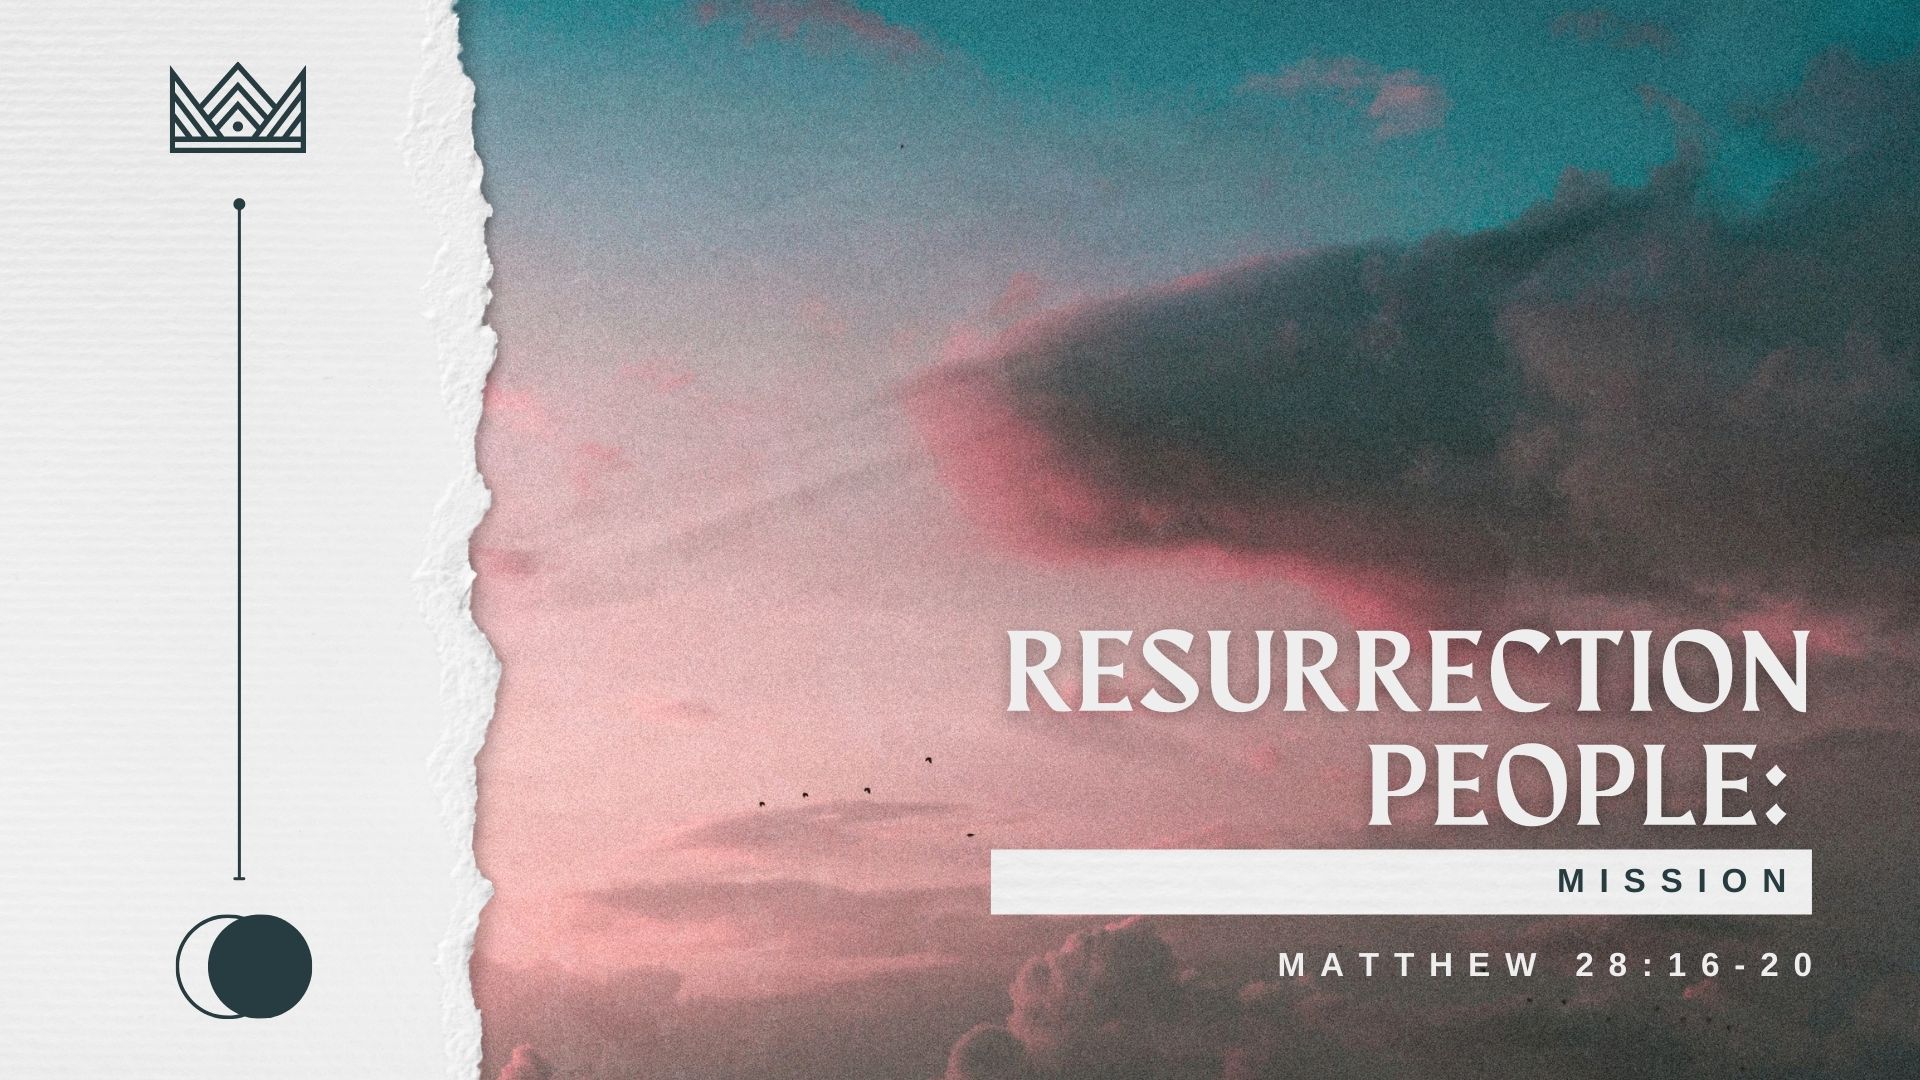 Resurrection People: Mission